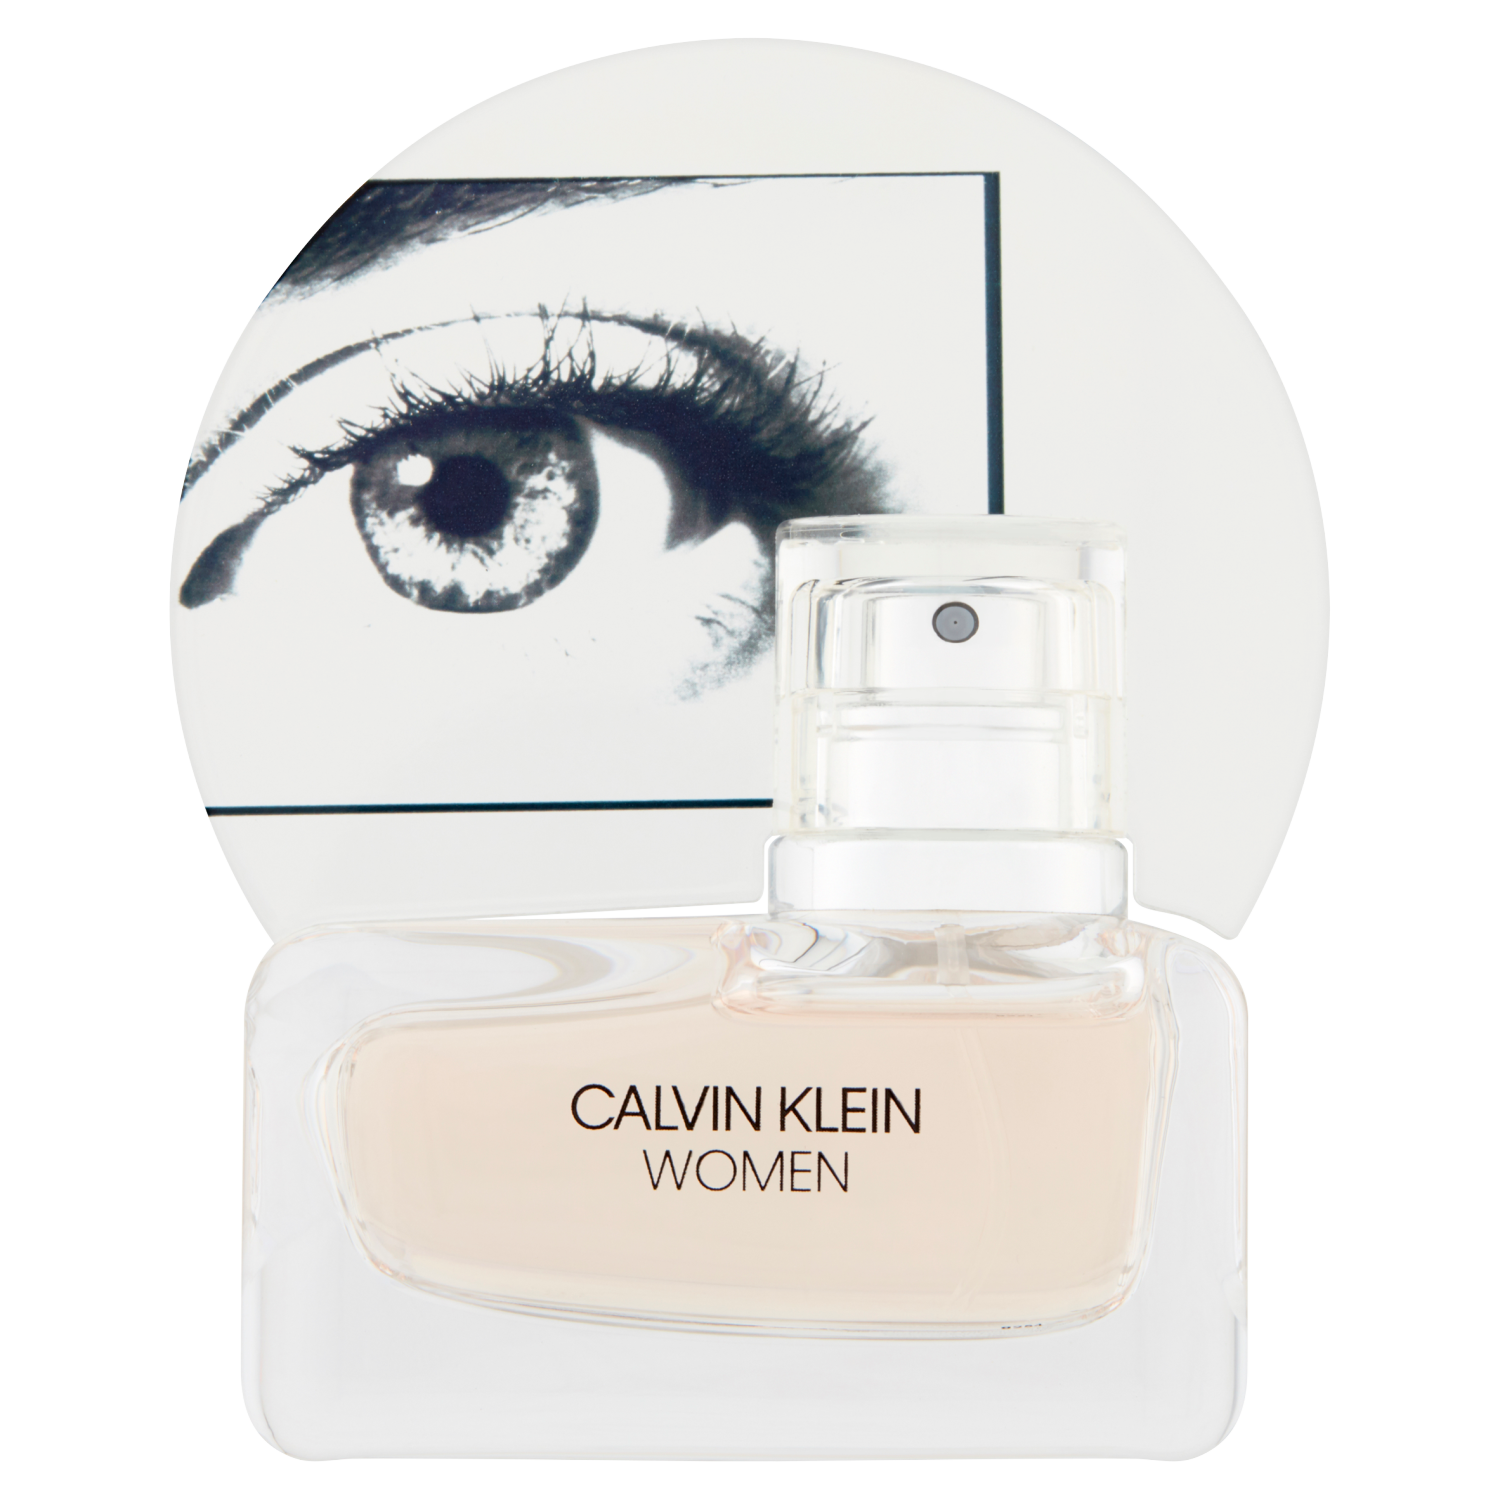 Женская парфюмерная вода Calvin Klein Women, 30 мл цена и фото